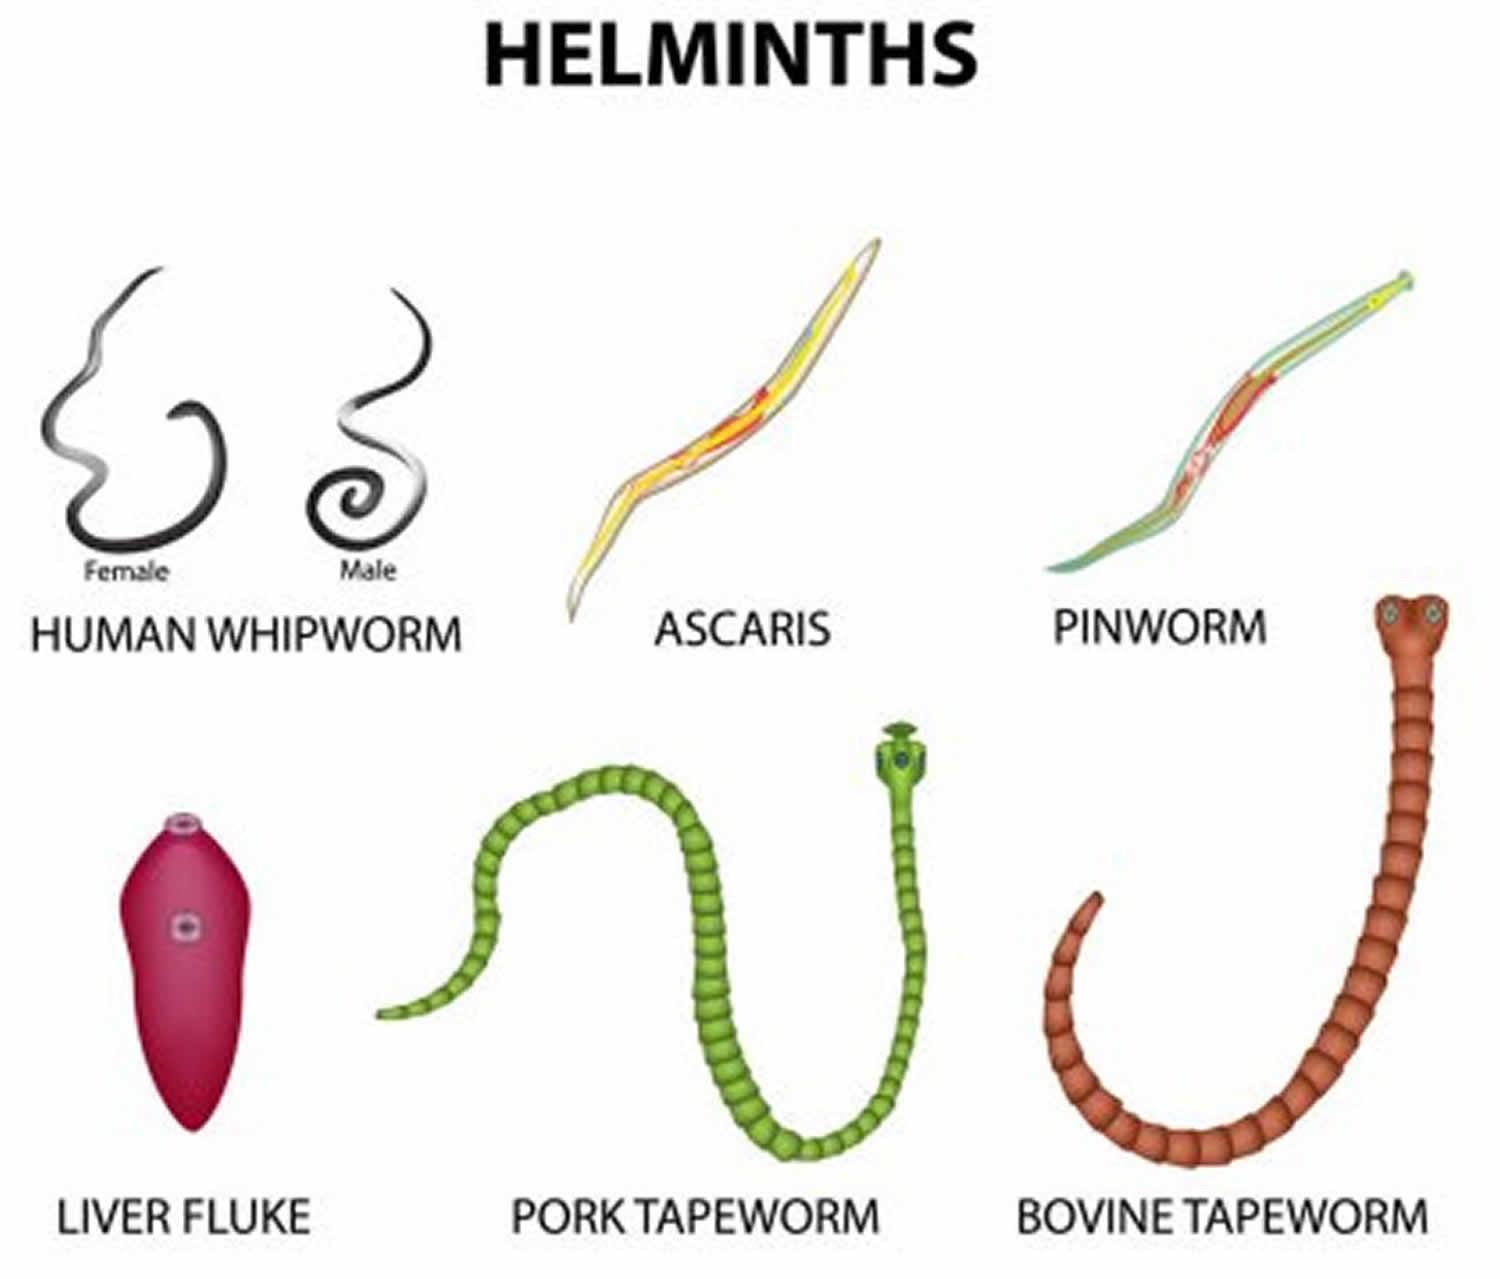 helminth infection symptoms